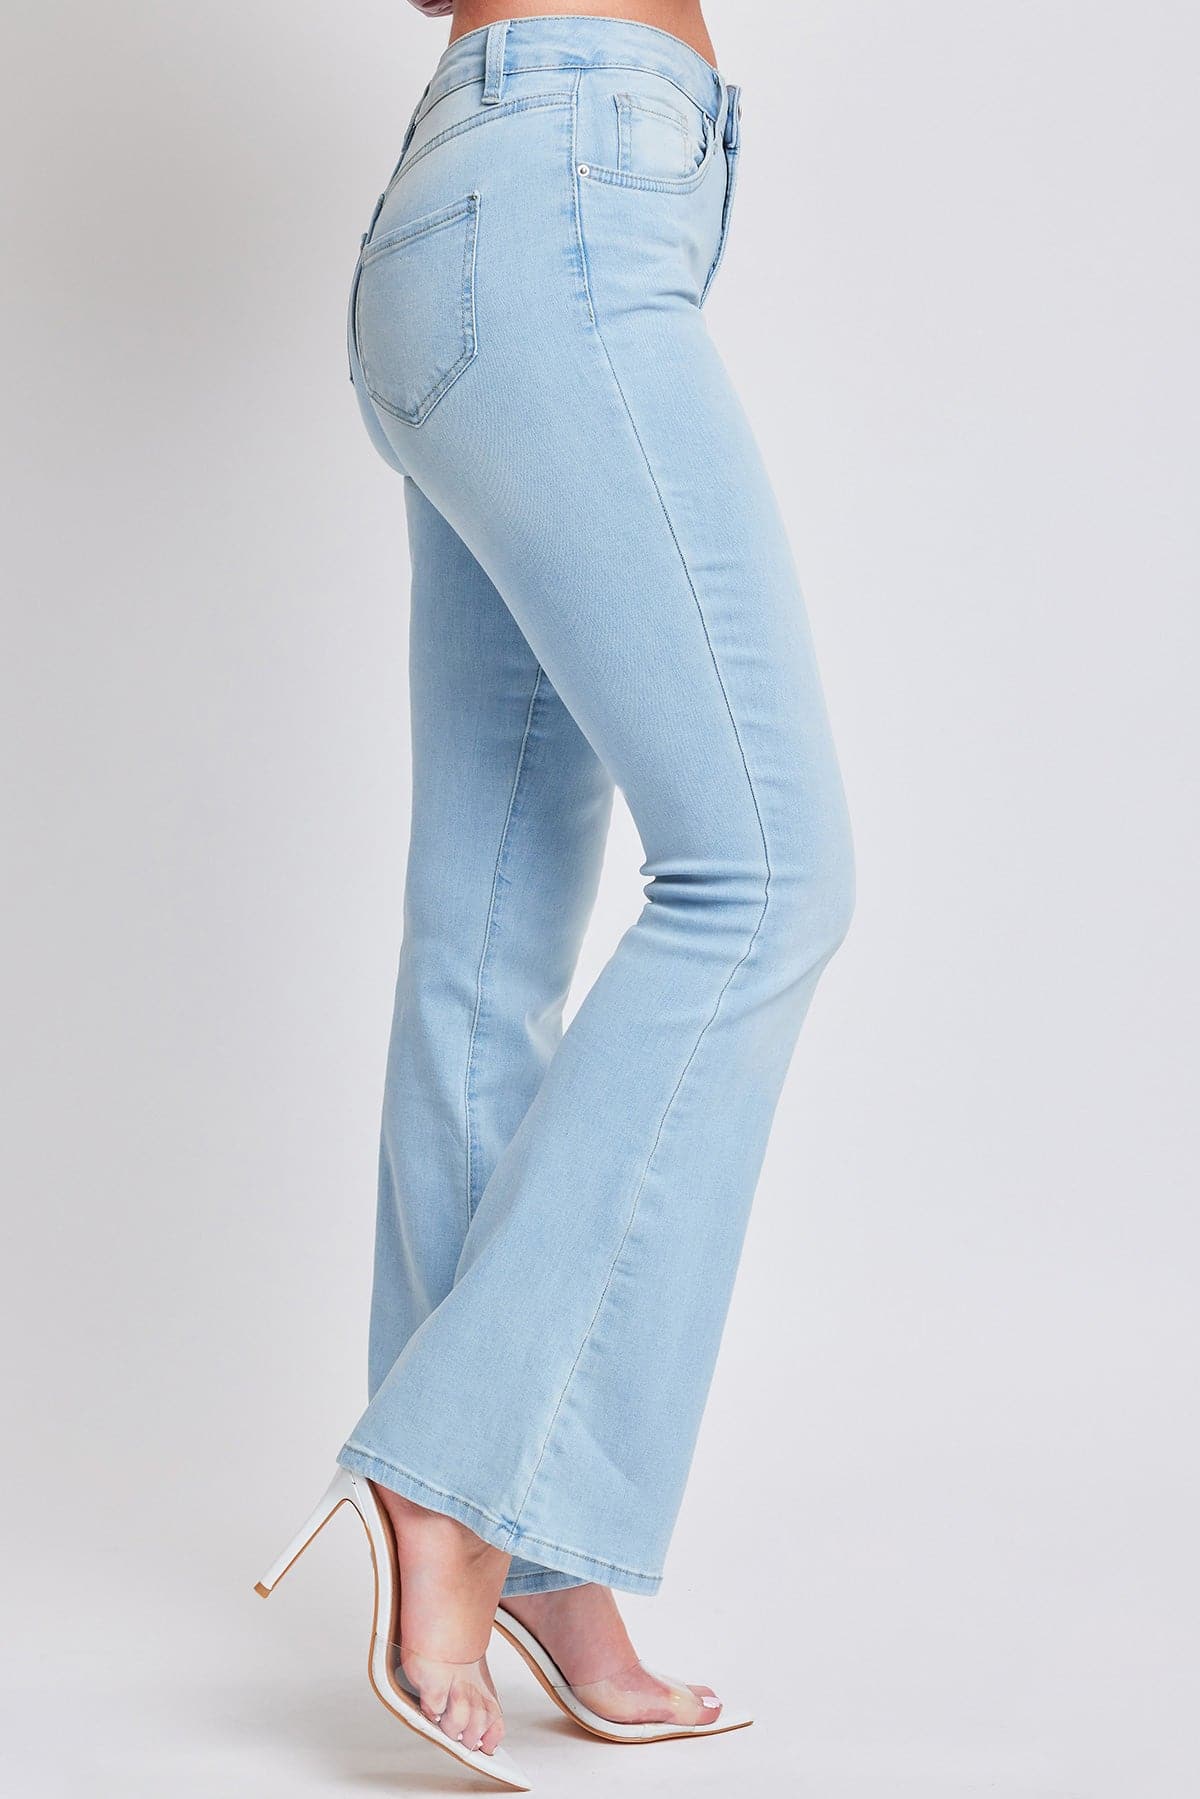 Women's Essential Flare Jeans - Regular Inseam